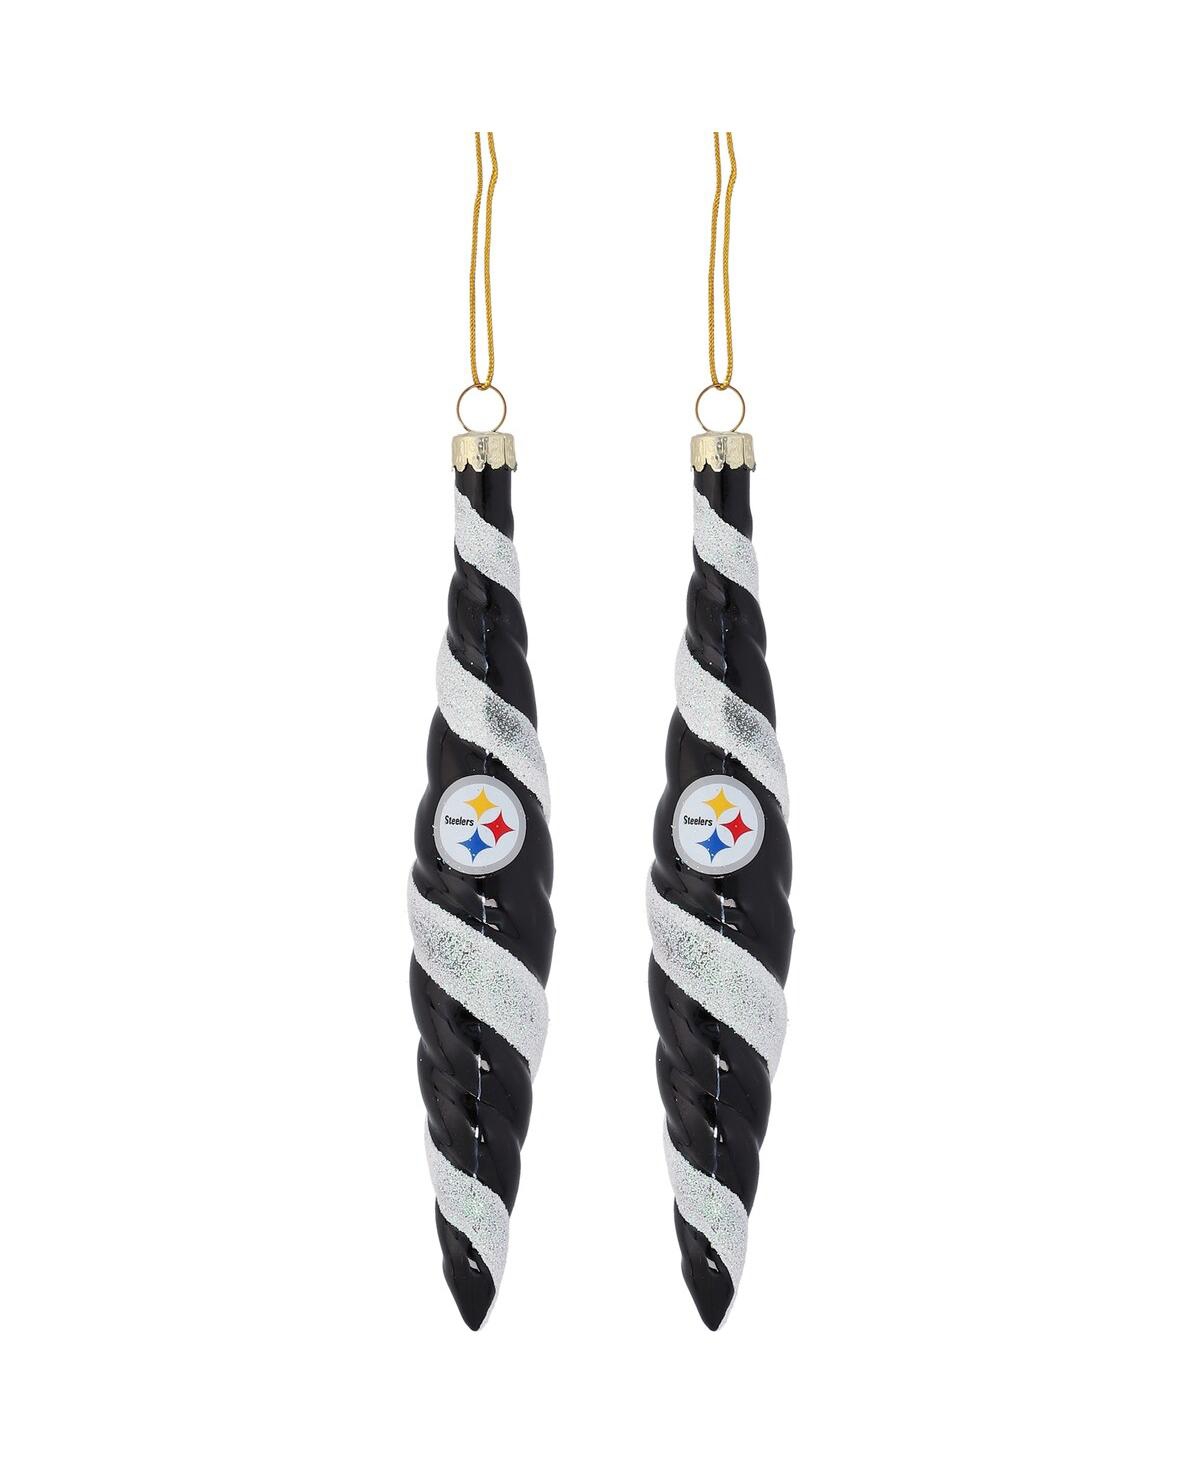 Pittsburgh Steelers Two-Pack Swirl Blown Glass Ornament Set - Black, White